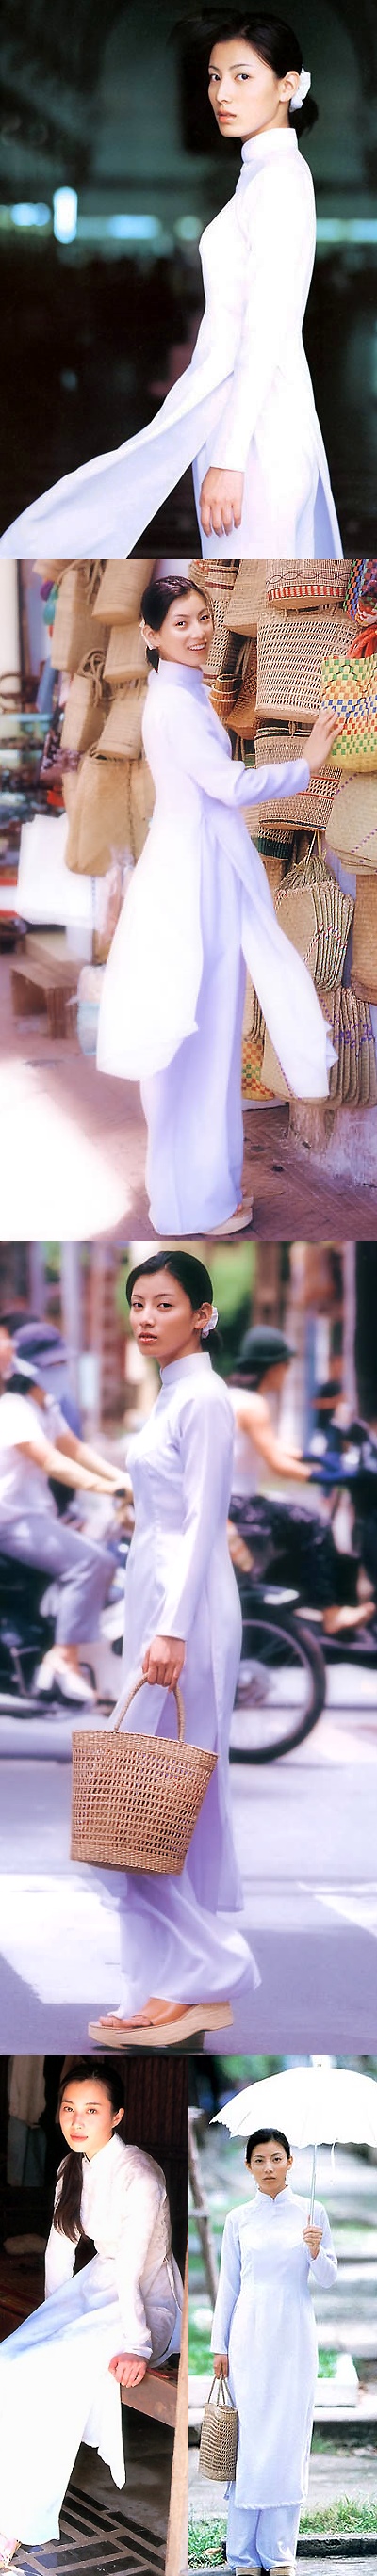 Vietnamese National Outfit - Aodai (CM)